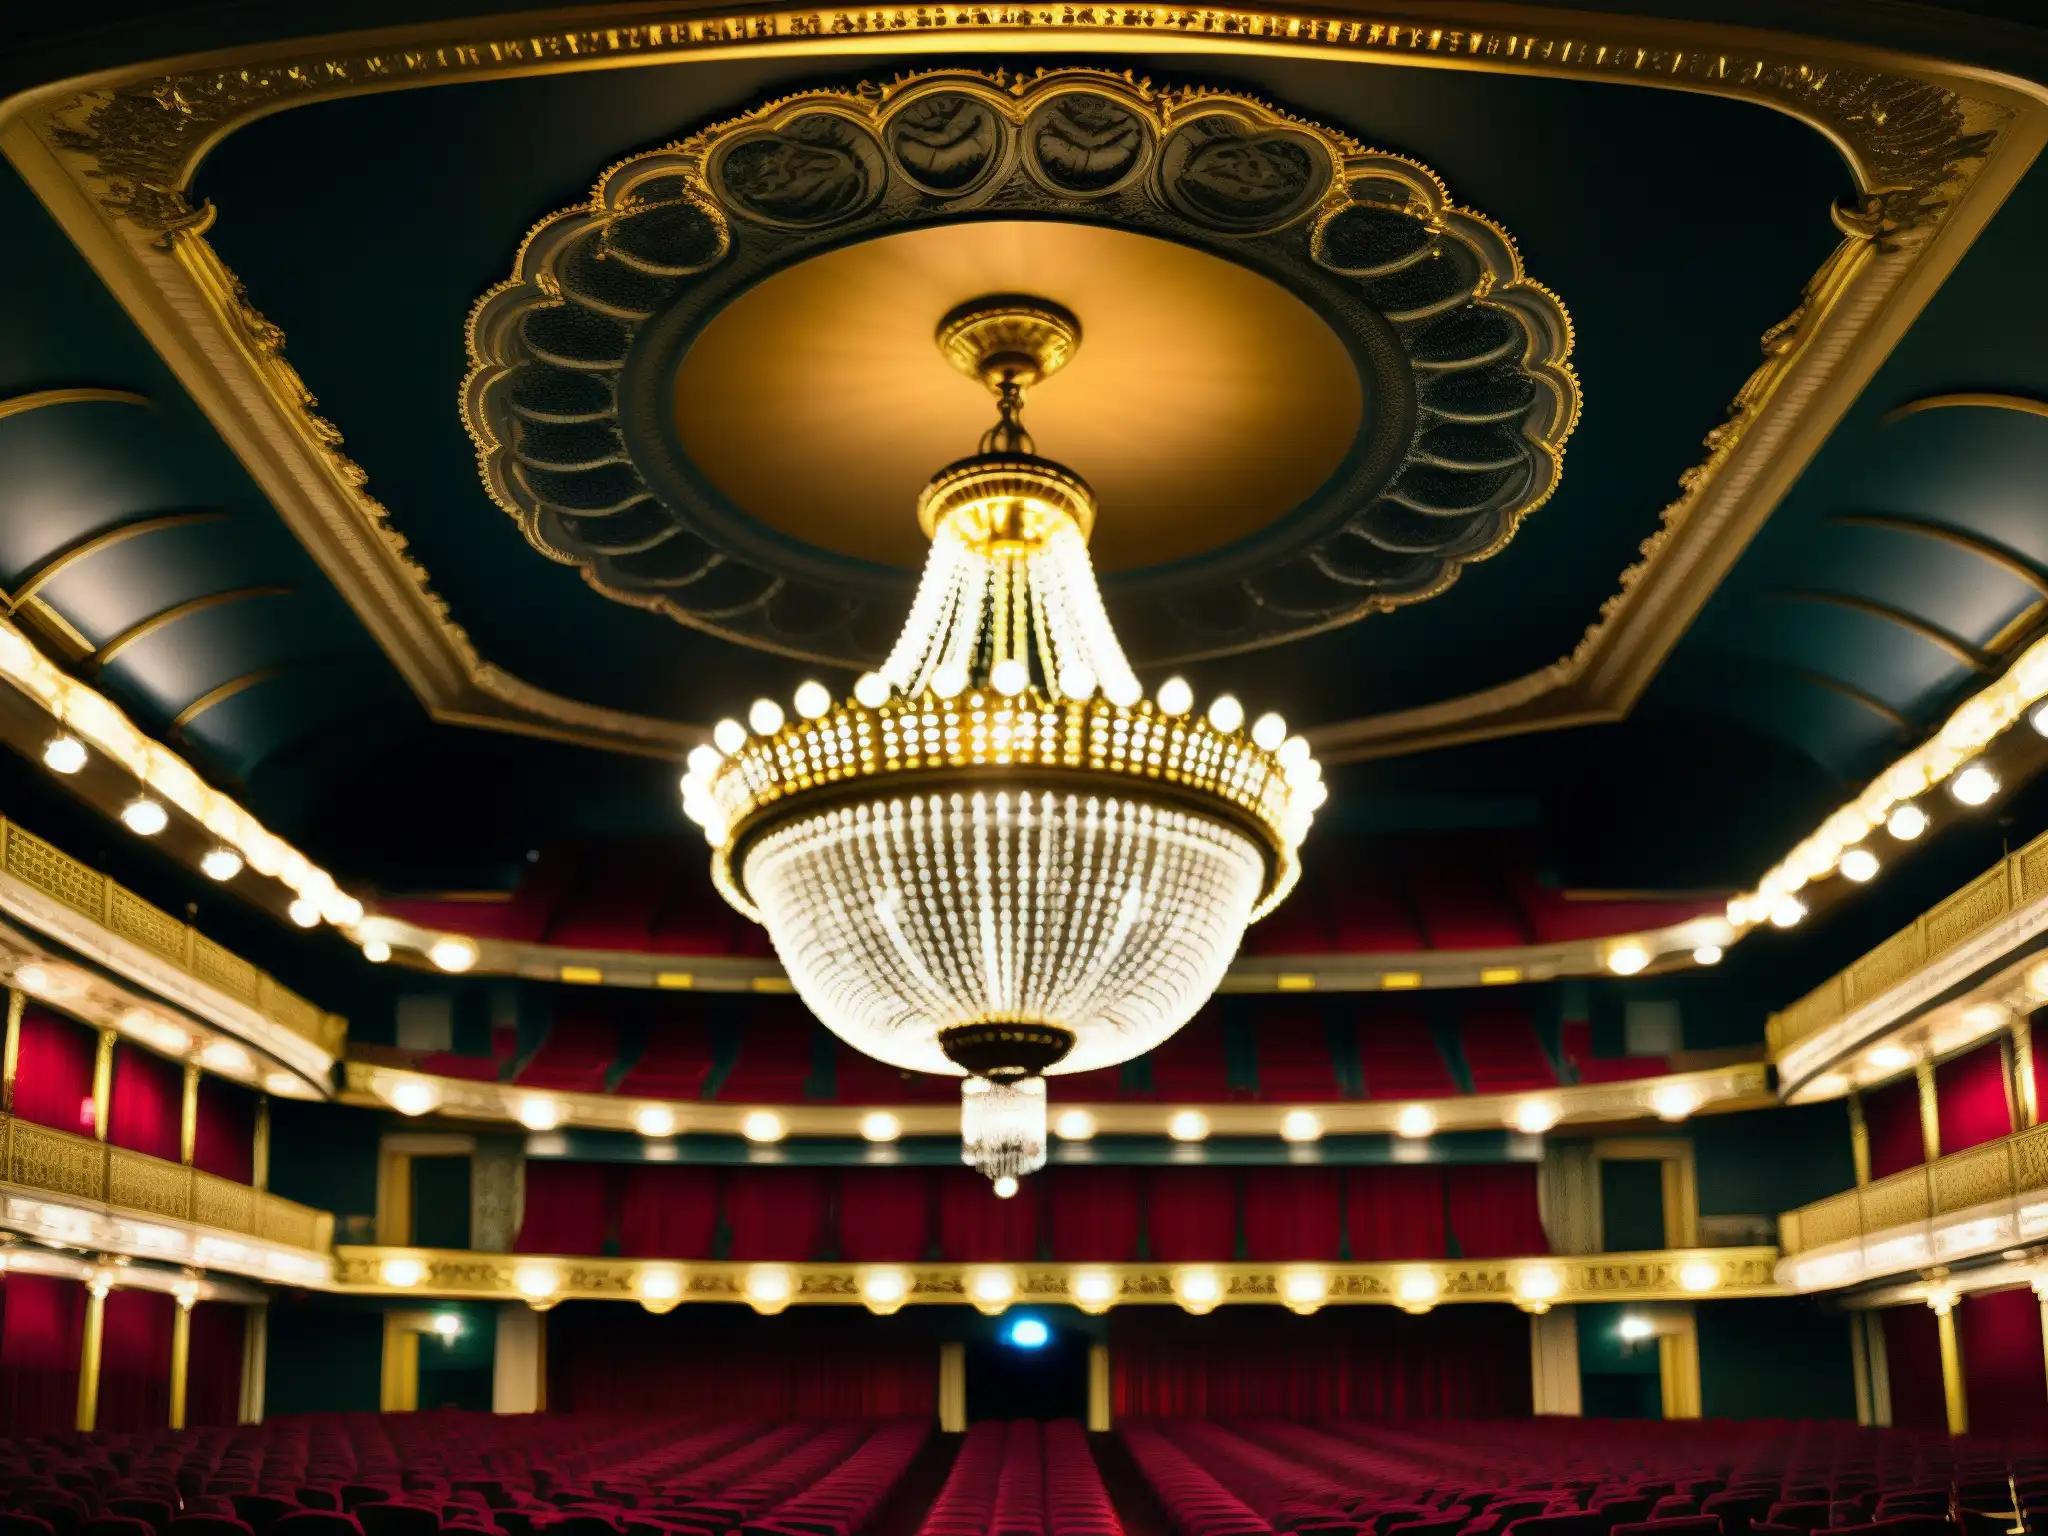 Interior opulento de la Ópera de Nueva Orleans, evocando la atmósfera del Fantasma de la Ópera